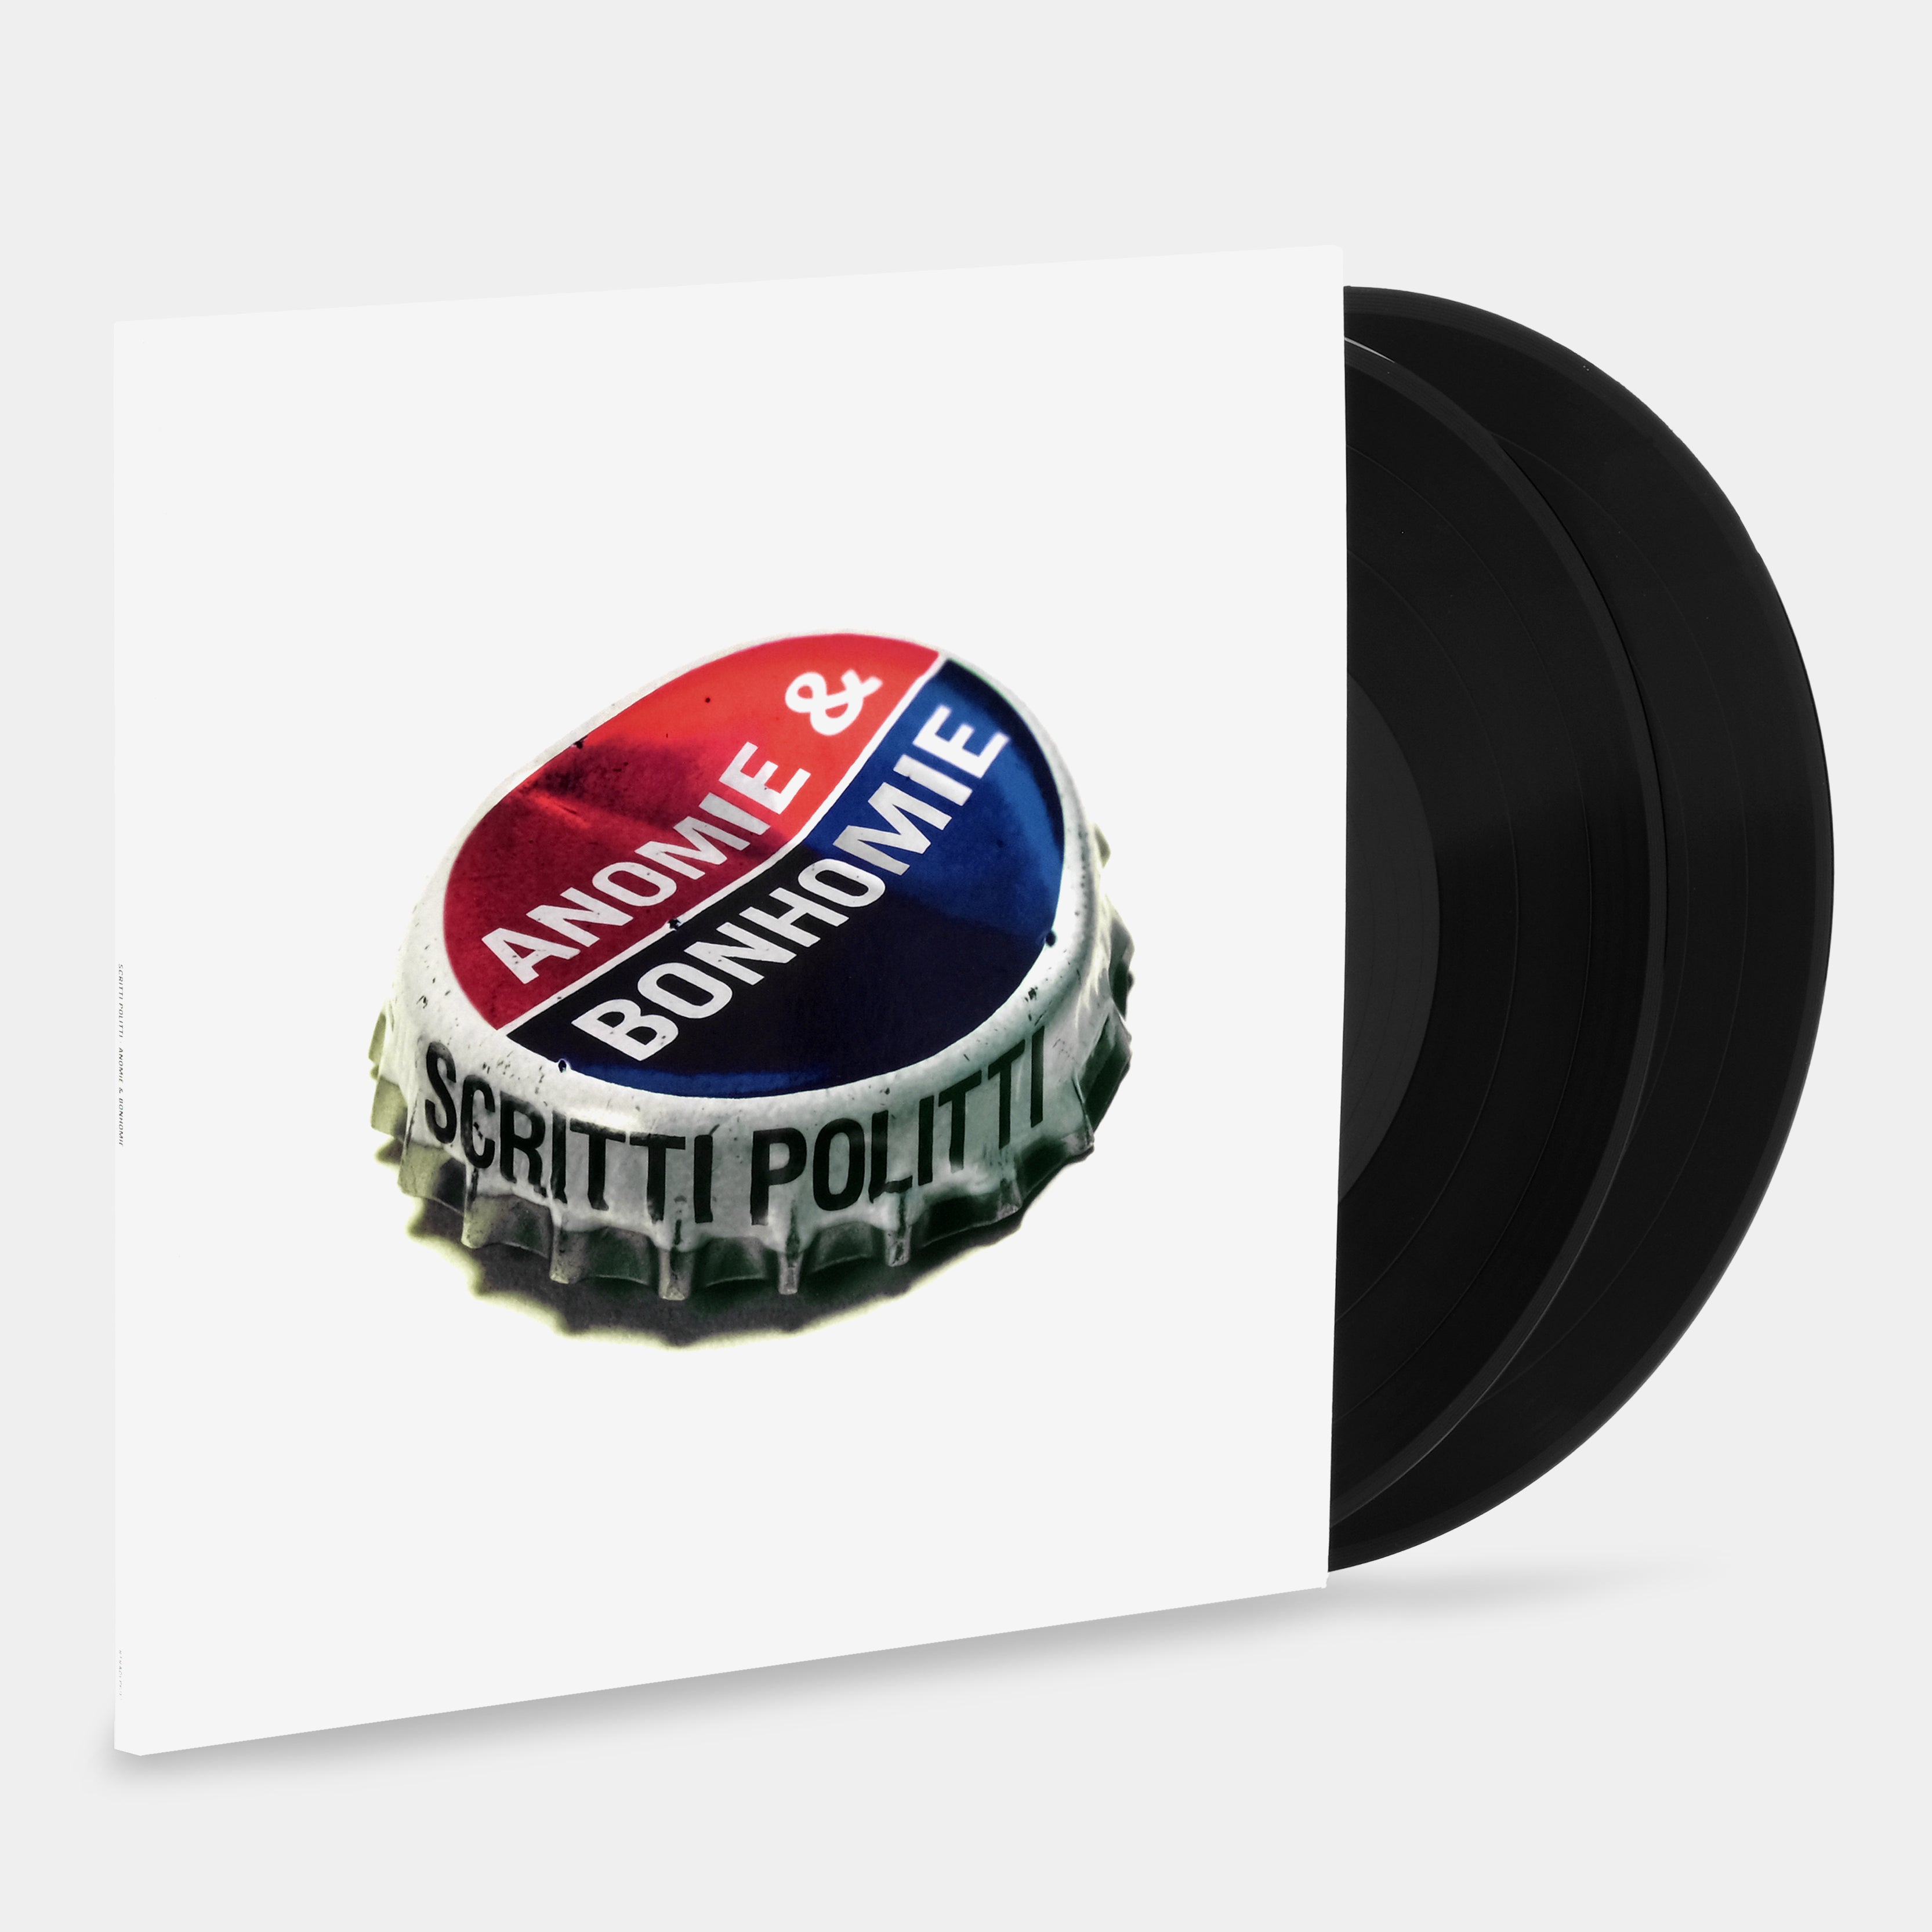 Scritti Politti - Anomie & Bonhomie 2xLP Vinyl Record